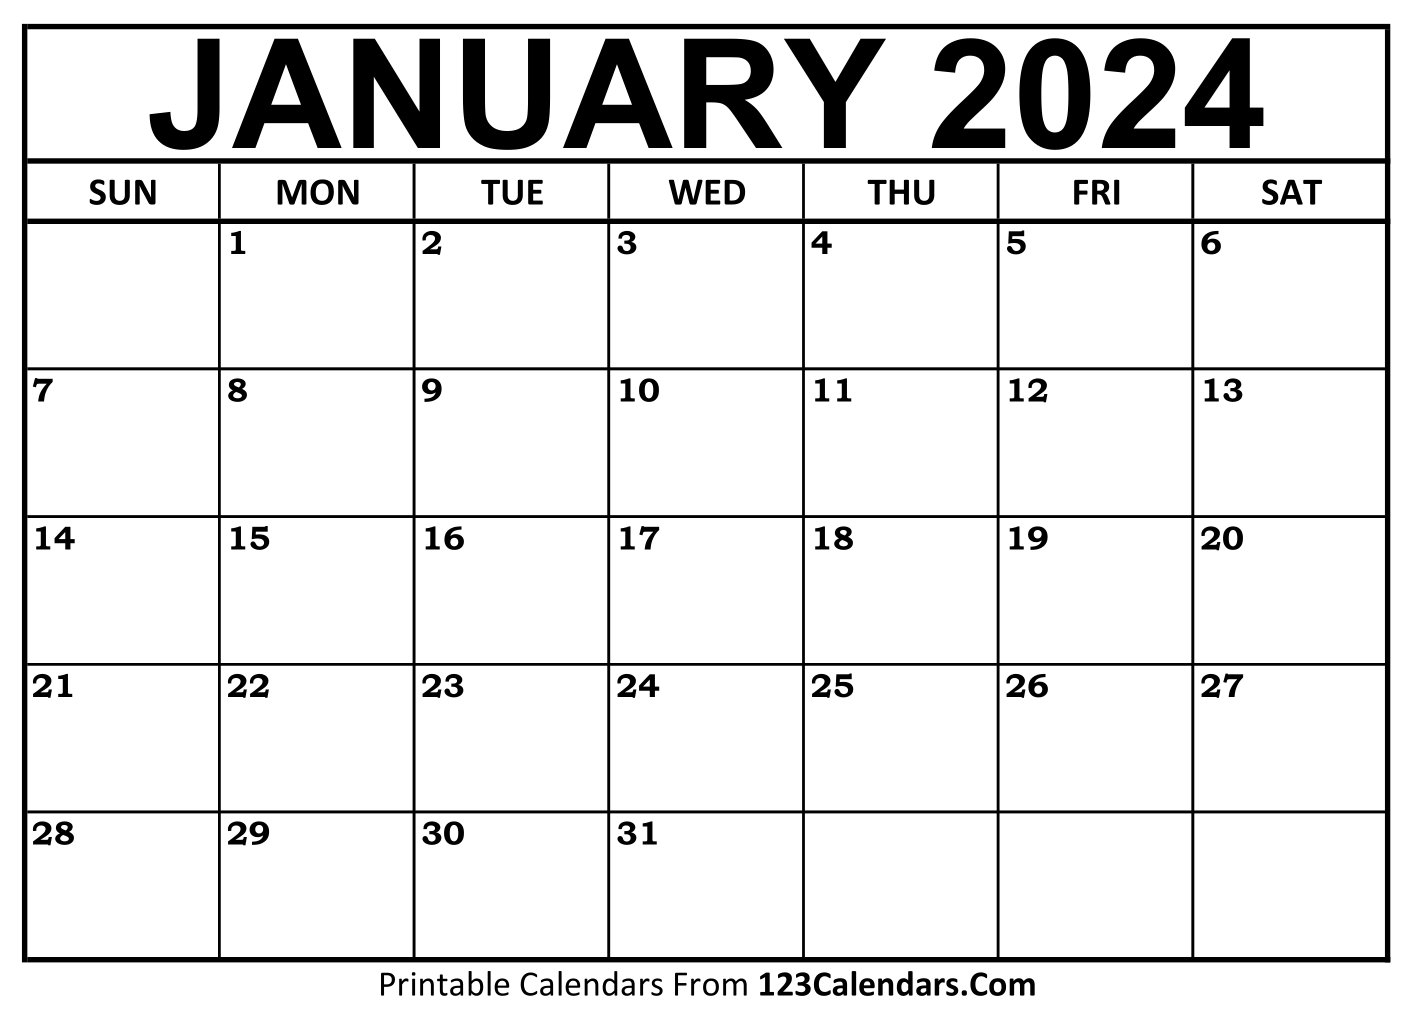 Printable January 2024 Calendar Templates - 123Calendars for Calendar Printable January 2024